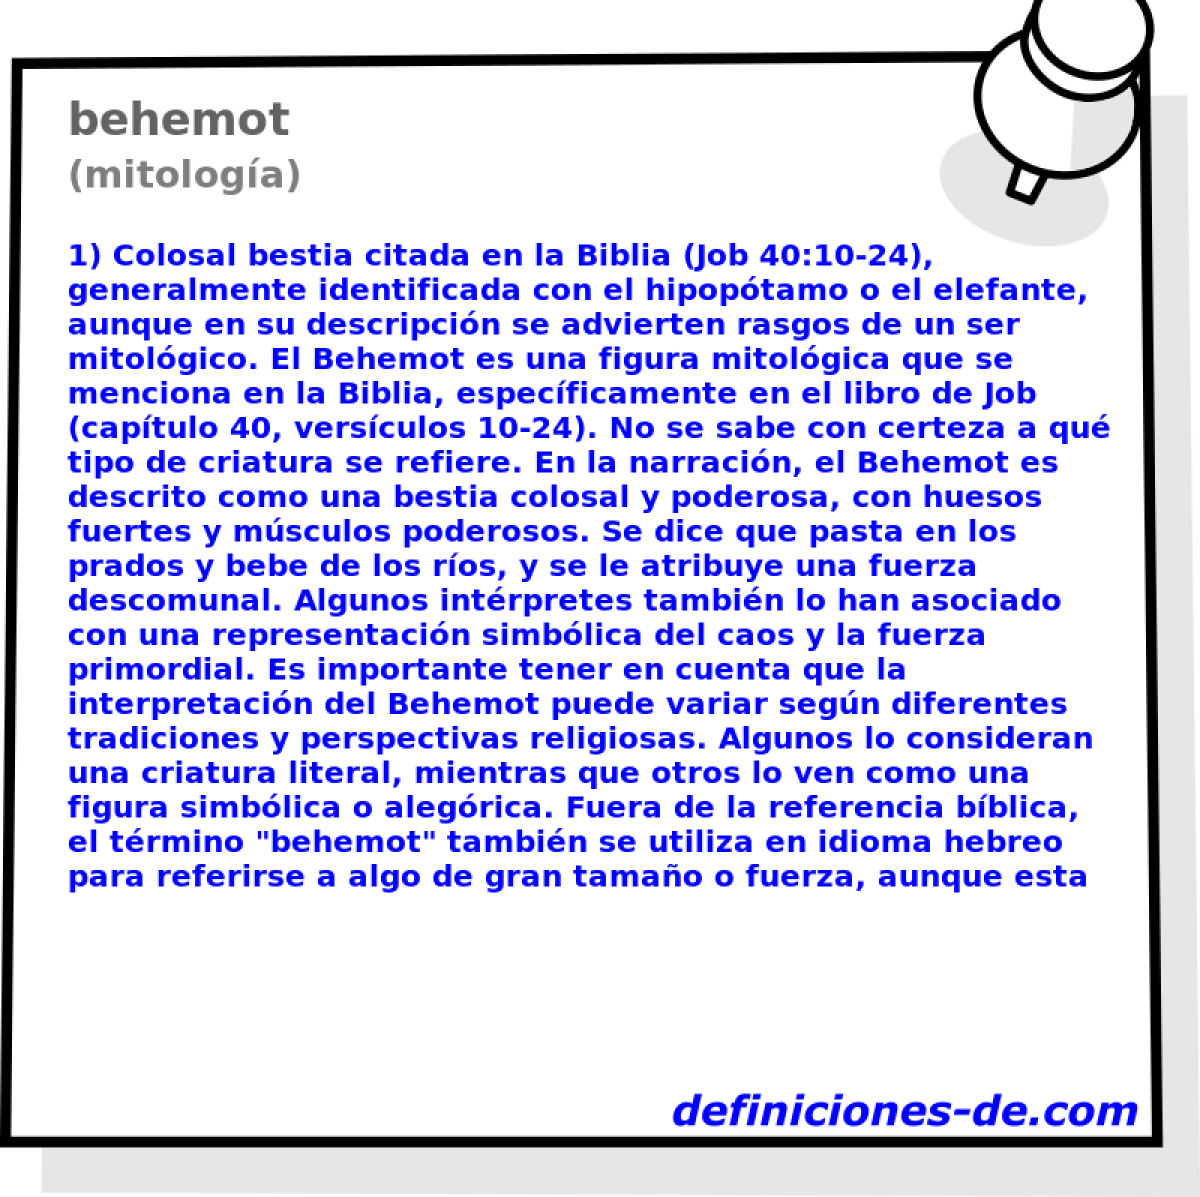 behemot (mitologa)